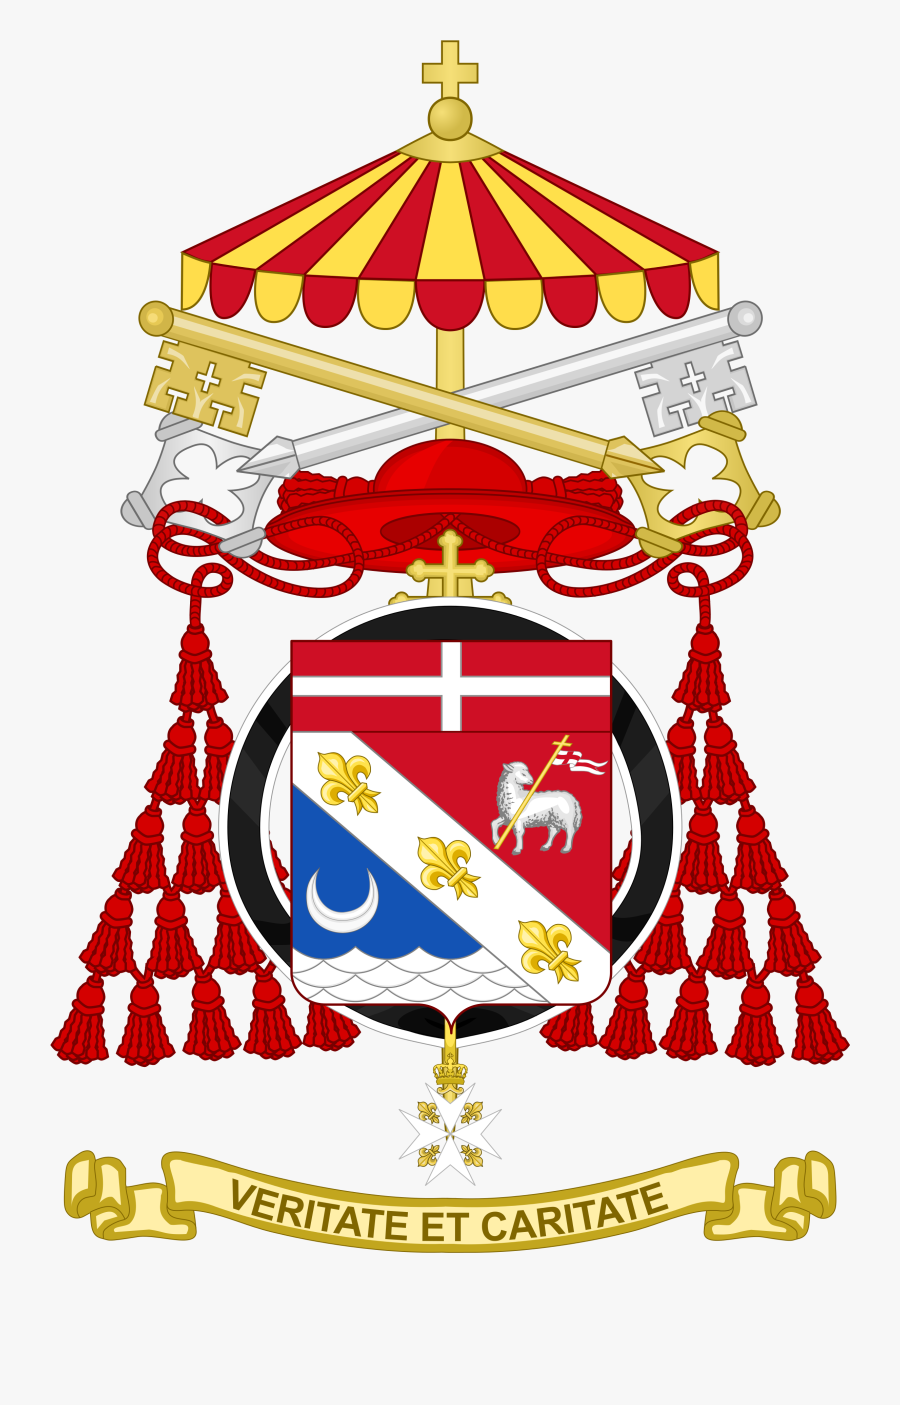 Coat Of Arms Of Jean-louis Pierre Cardinal Tauran - Cardinal Wuerl Coat Of Arms, Transparent Clipart